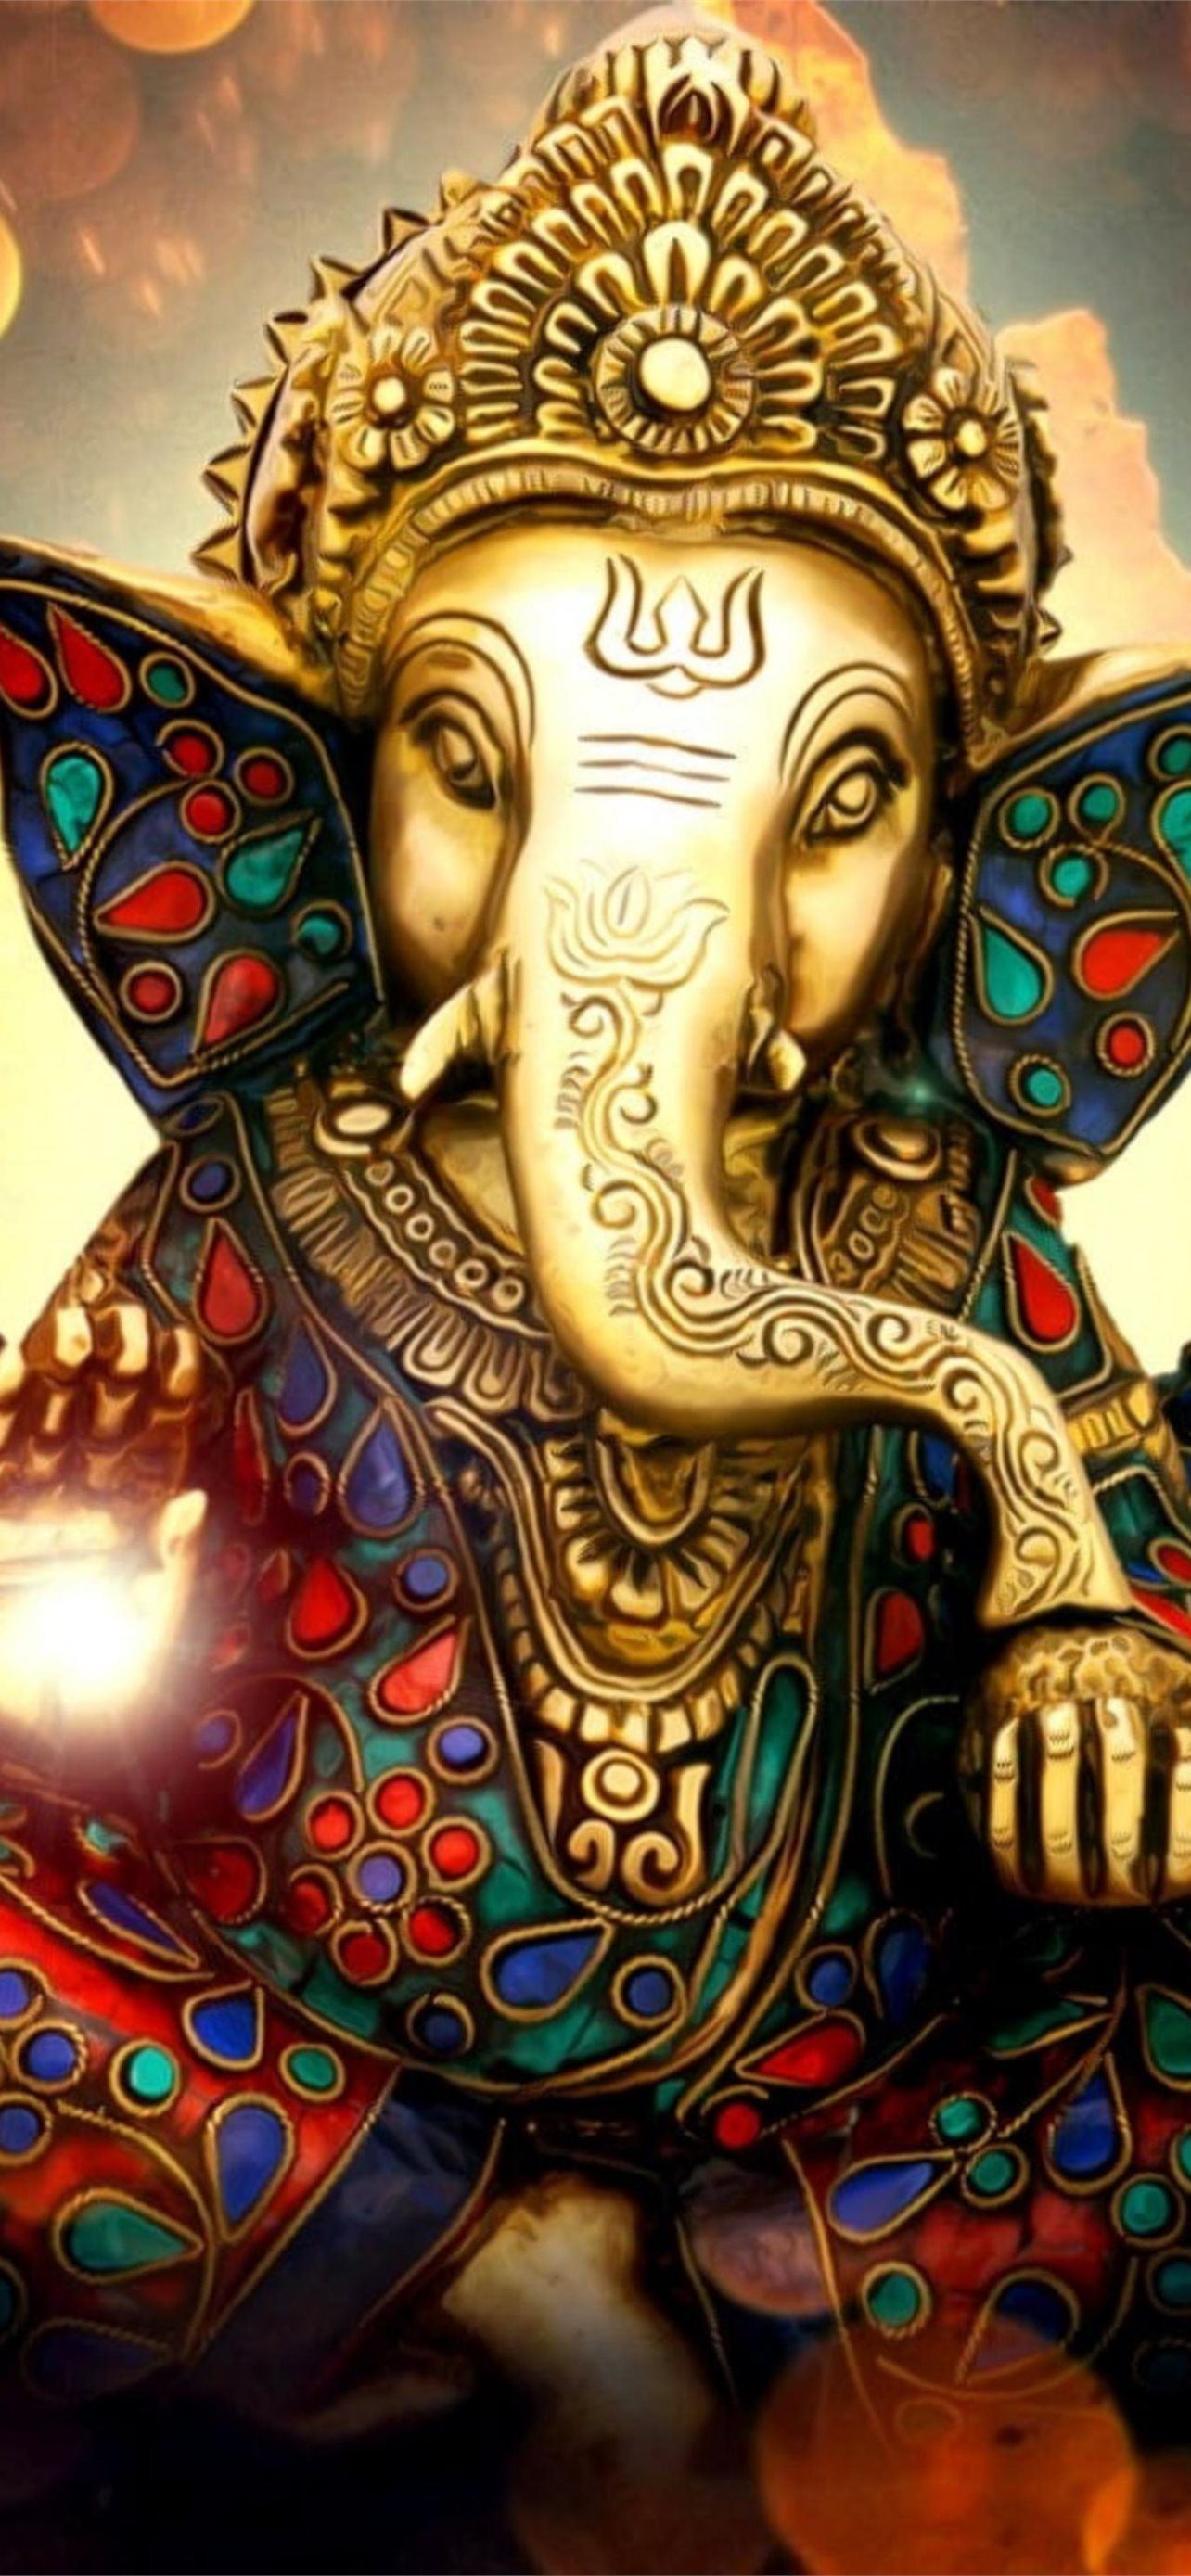 Amoled Hindu God Cave iPhone wallpaper 